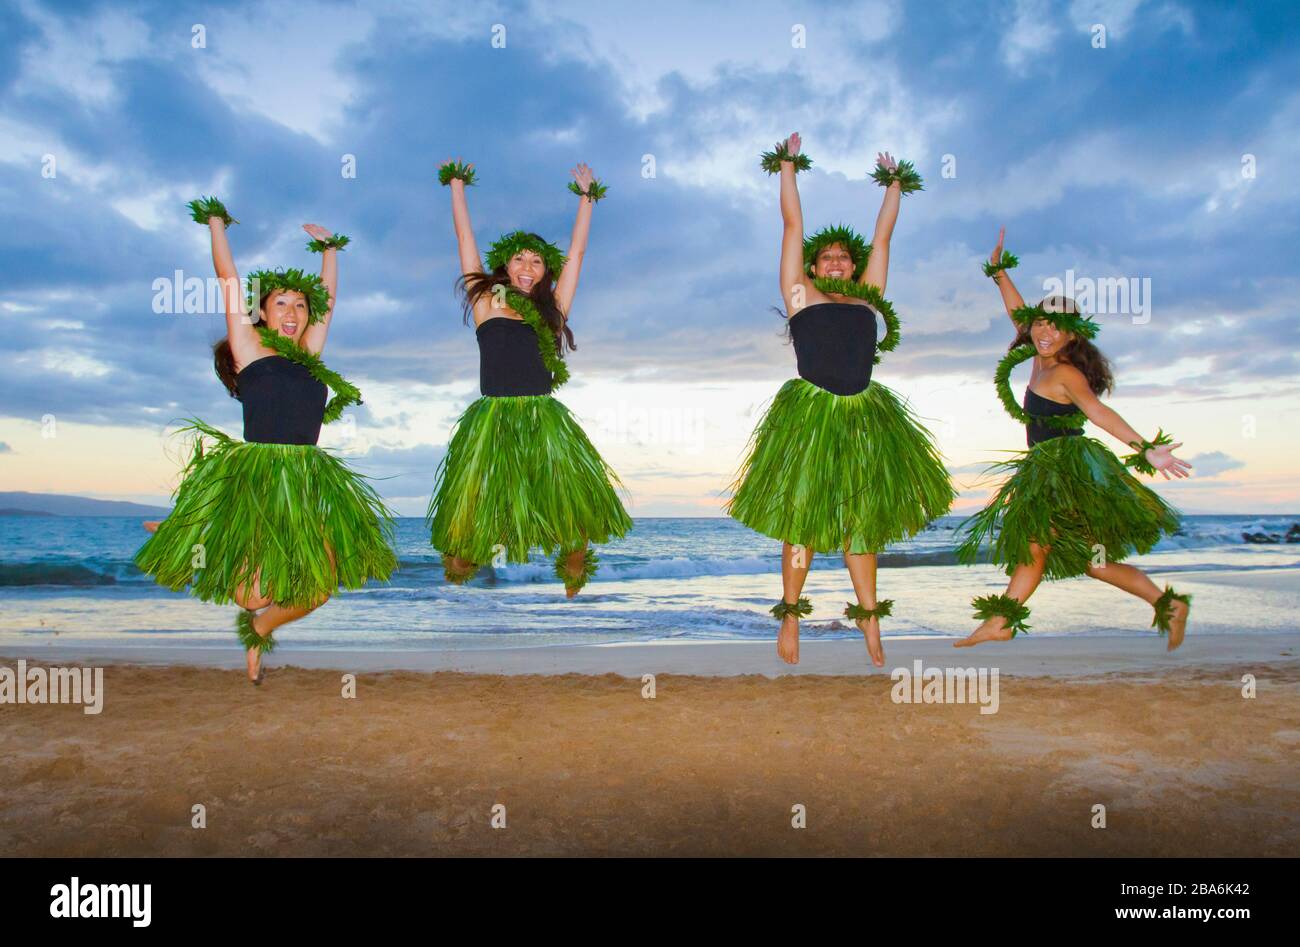 Four hula dancers jump for joy at Palauea, Maui. Hawaii. Stock Photo